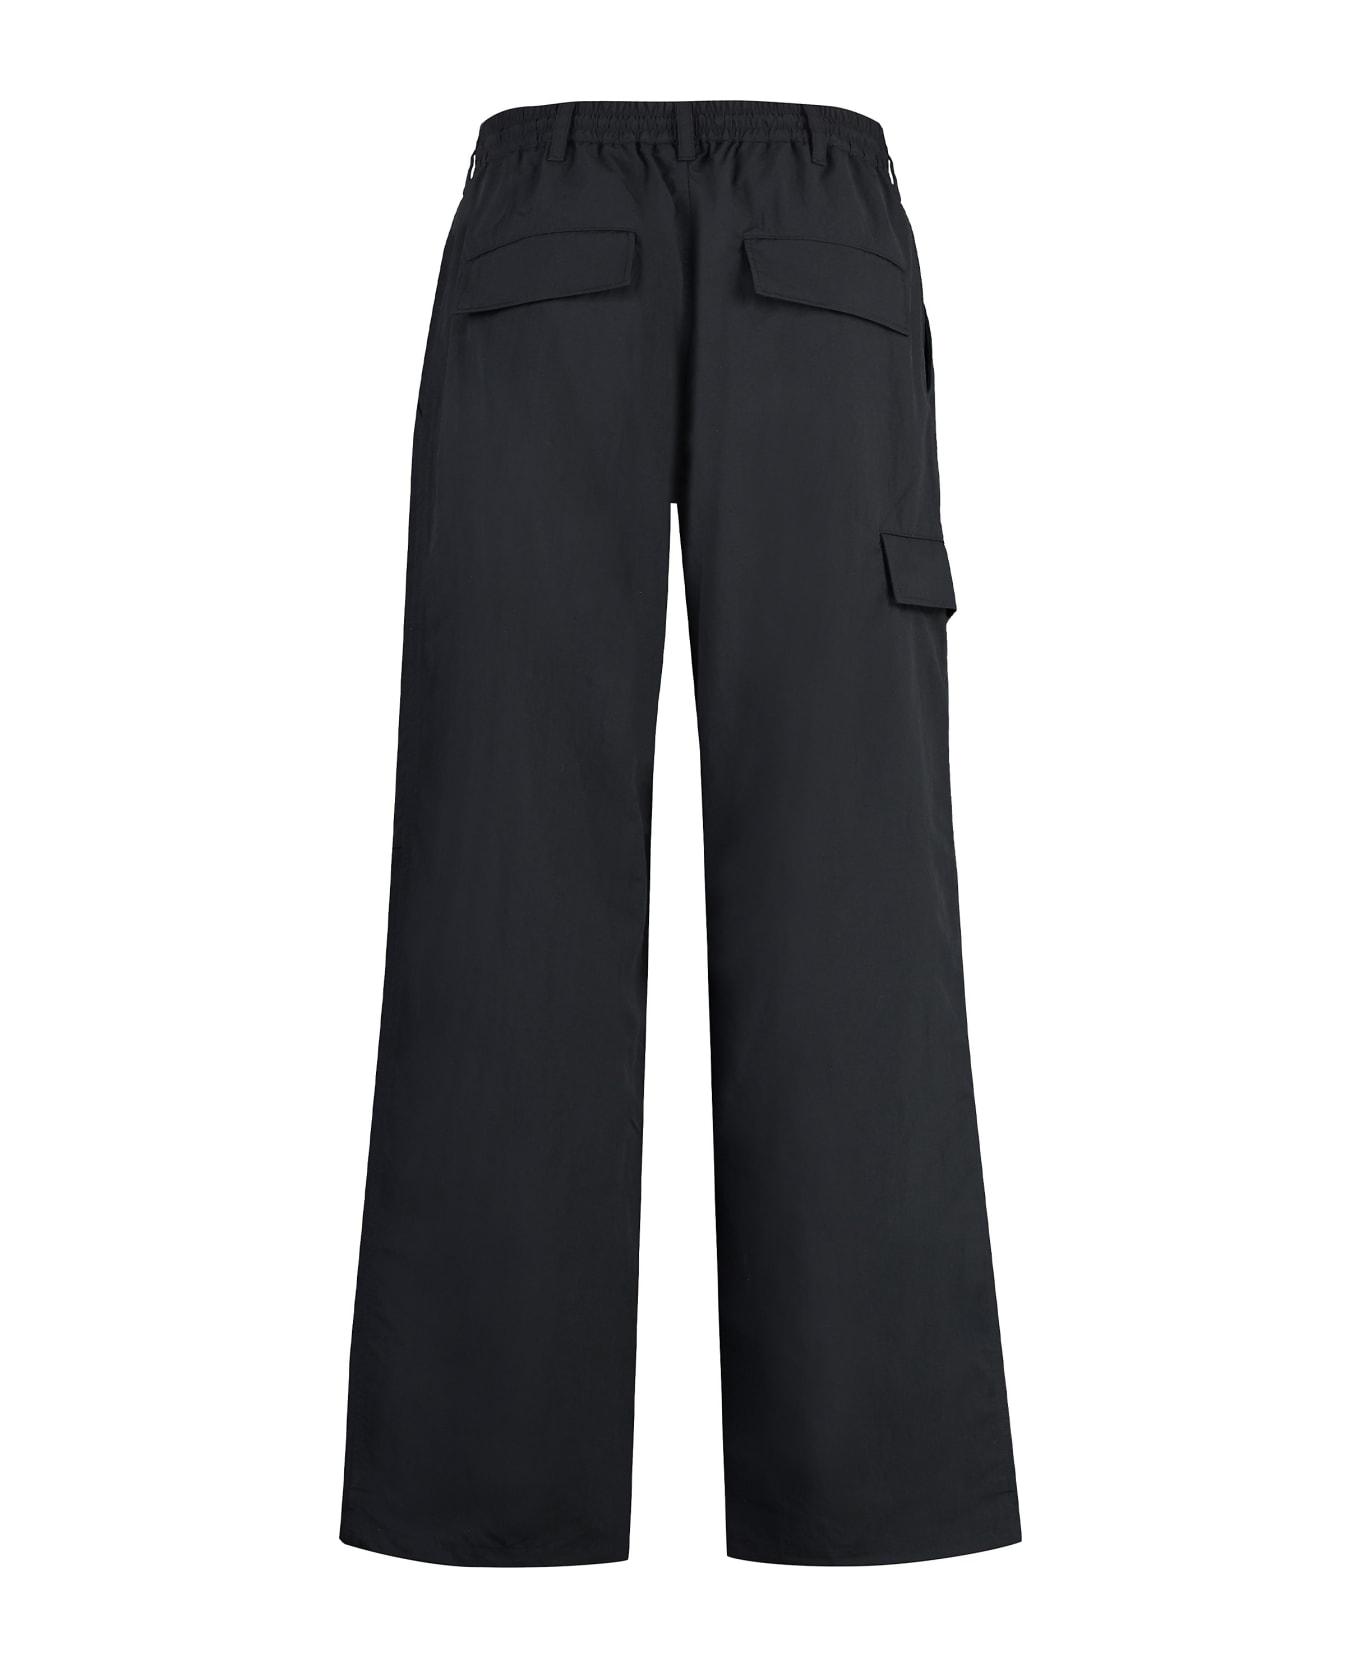 Y-3 Technical Fabric Pants - black